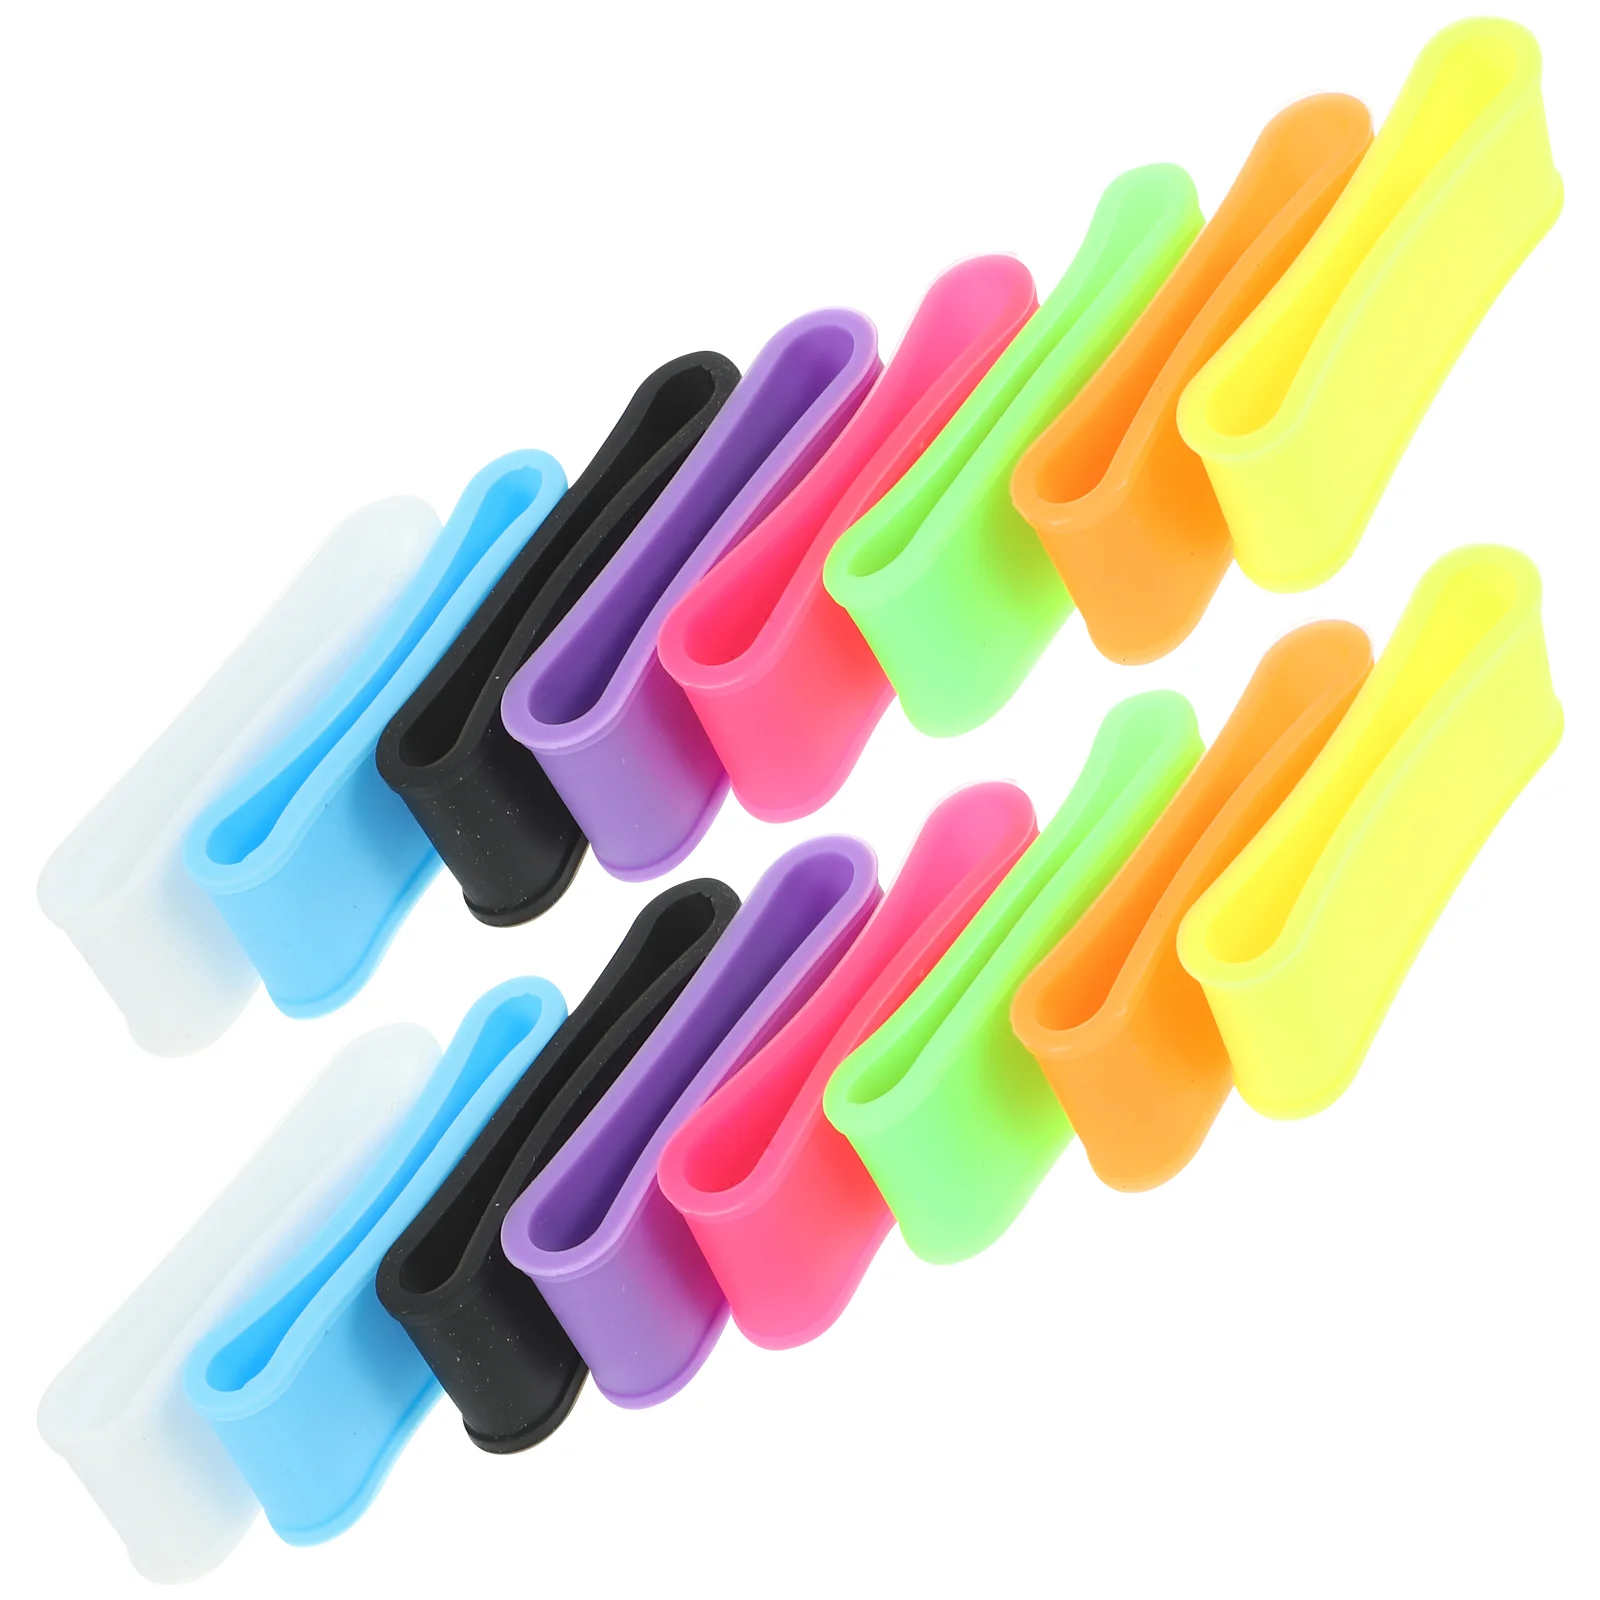 

16 Pcs Tennis Racket Universal Silicone Fixed Ring Elastic (random Color 16pcs) Grip Grips Convenient Rings Overgrip Protectors